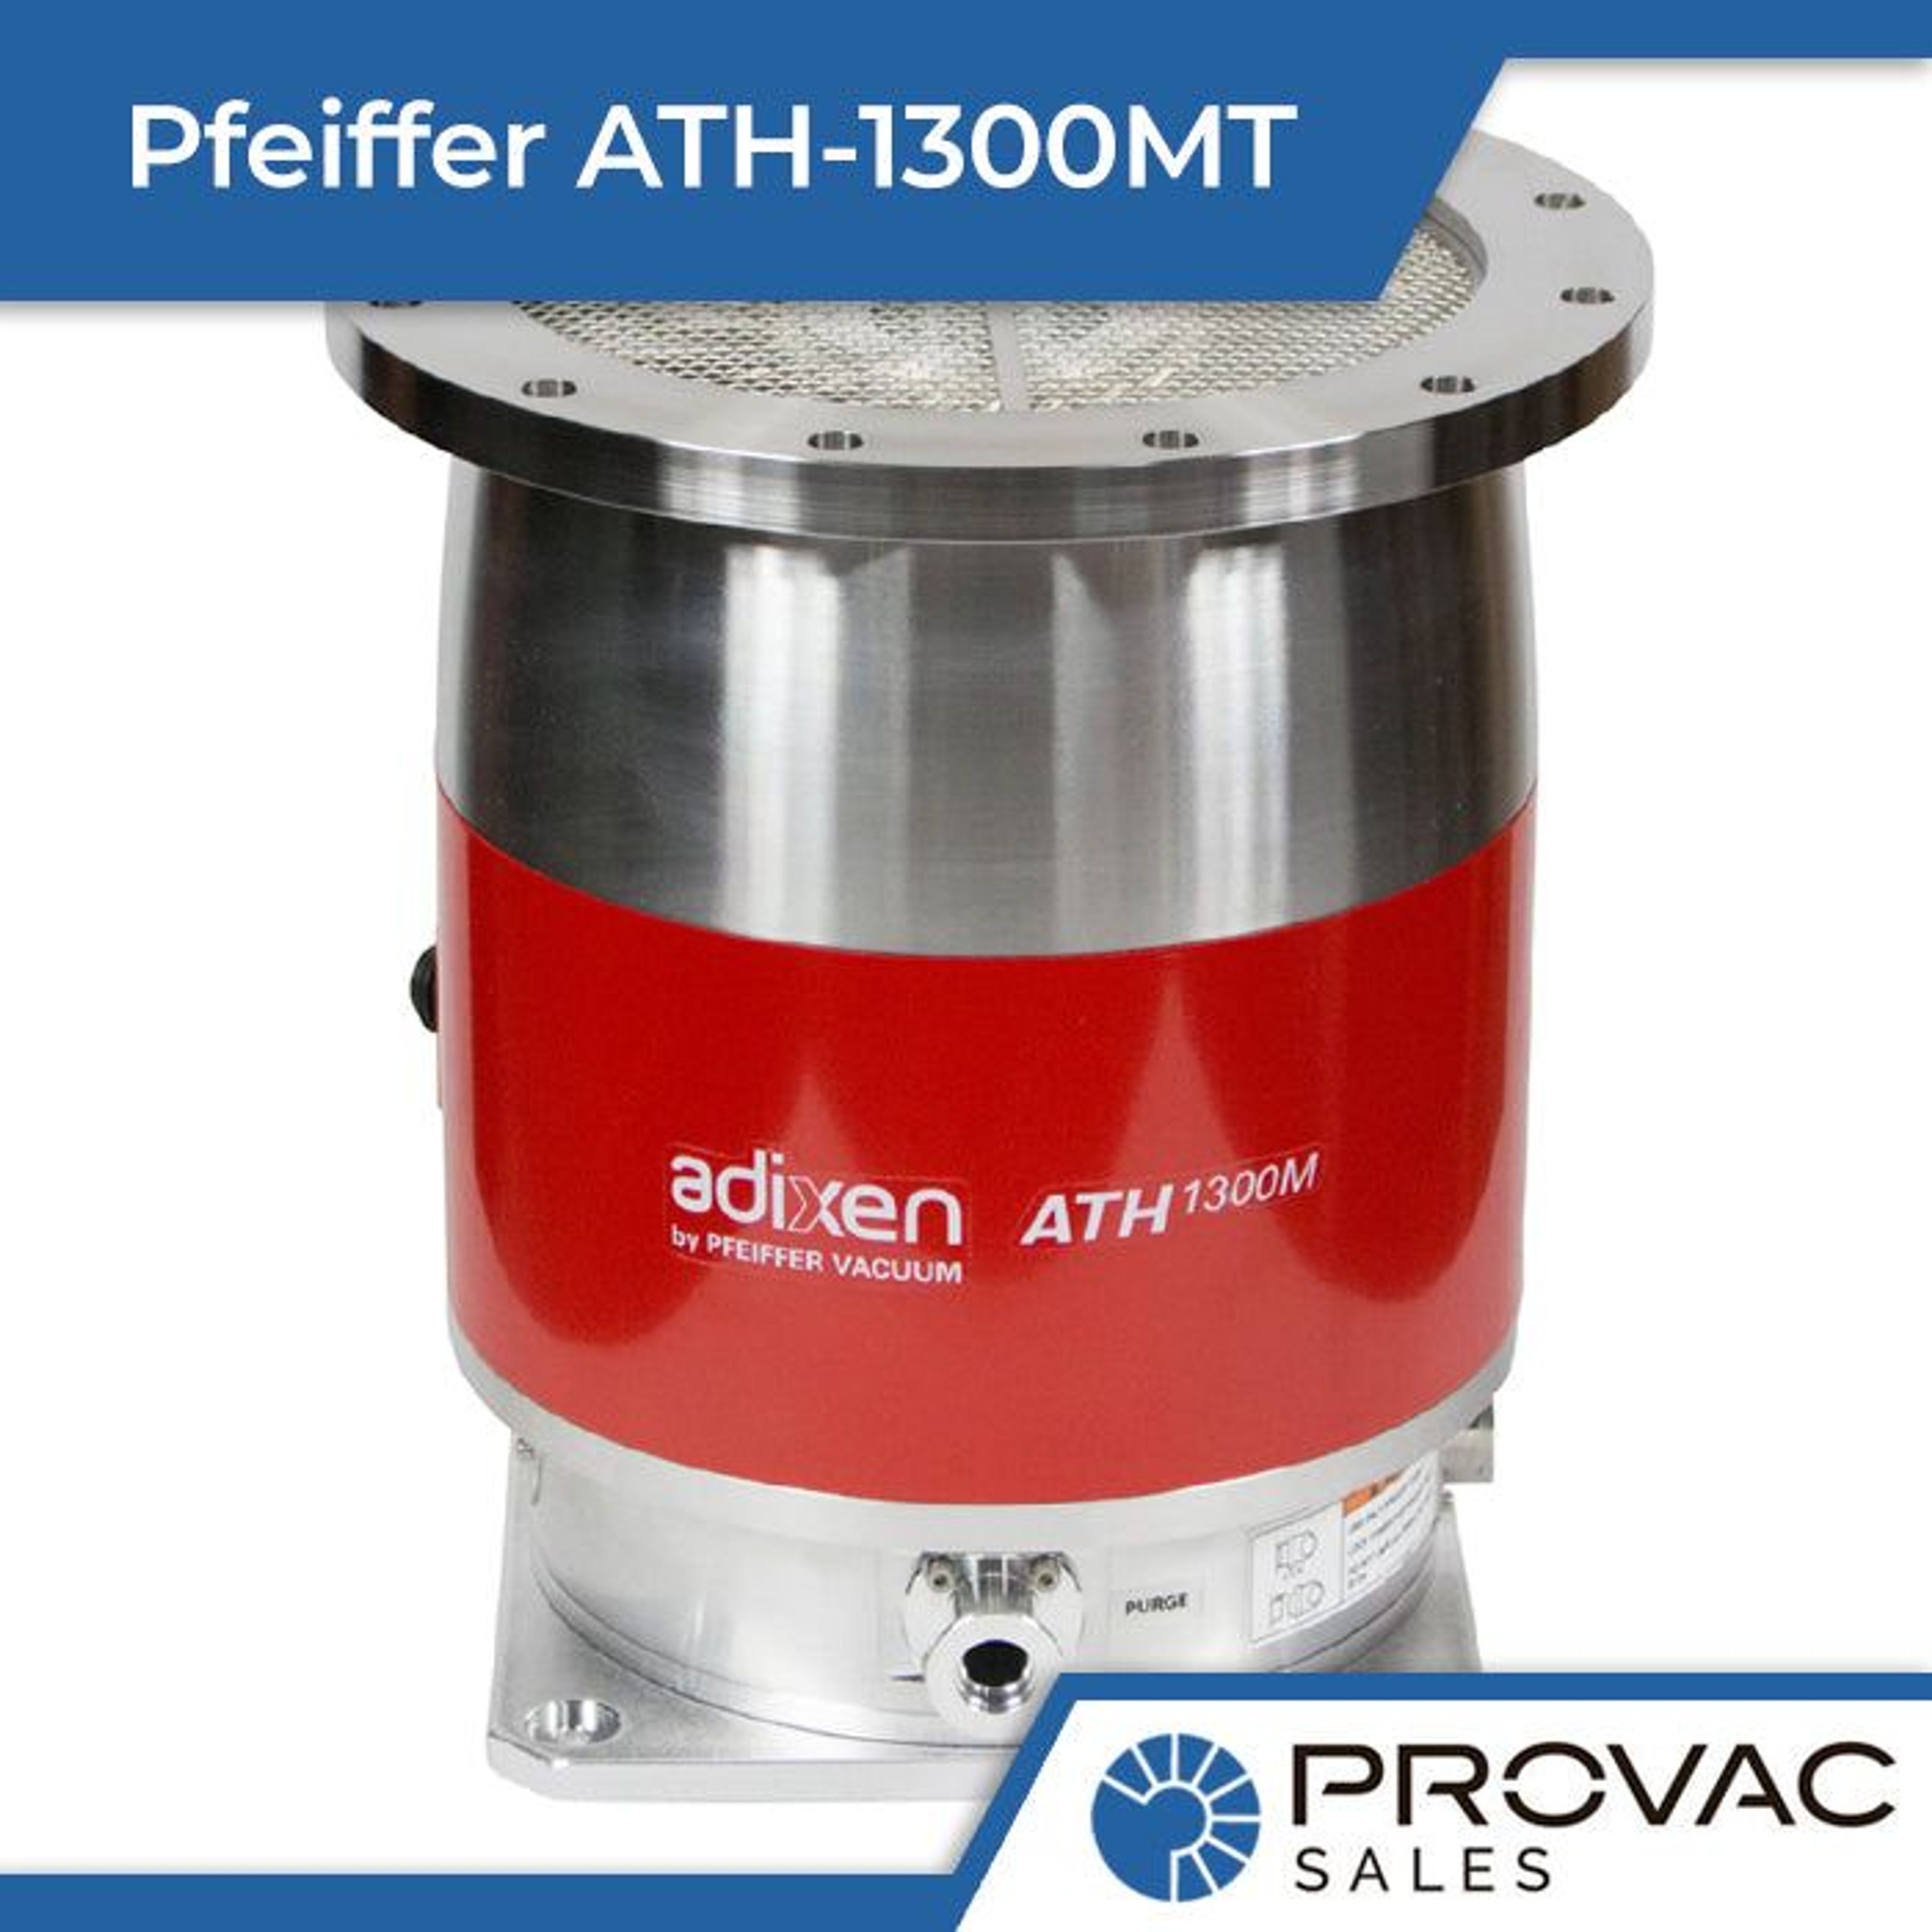 Product Spotlight: Pfeiffer ATH-1300MT Turbo Pump Background